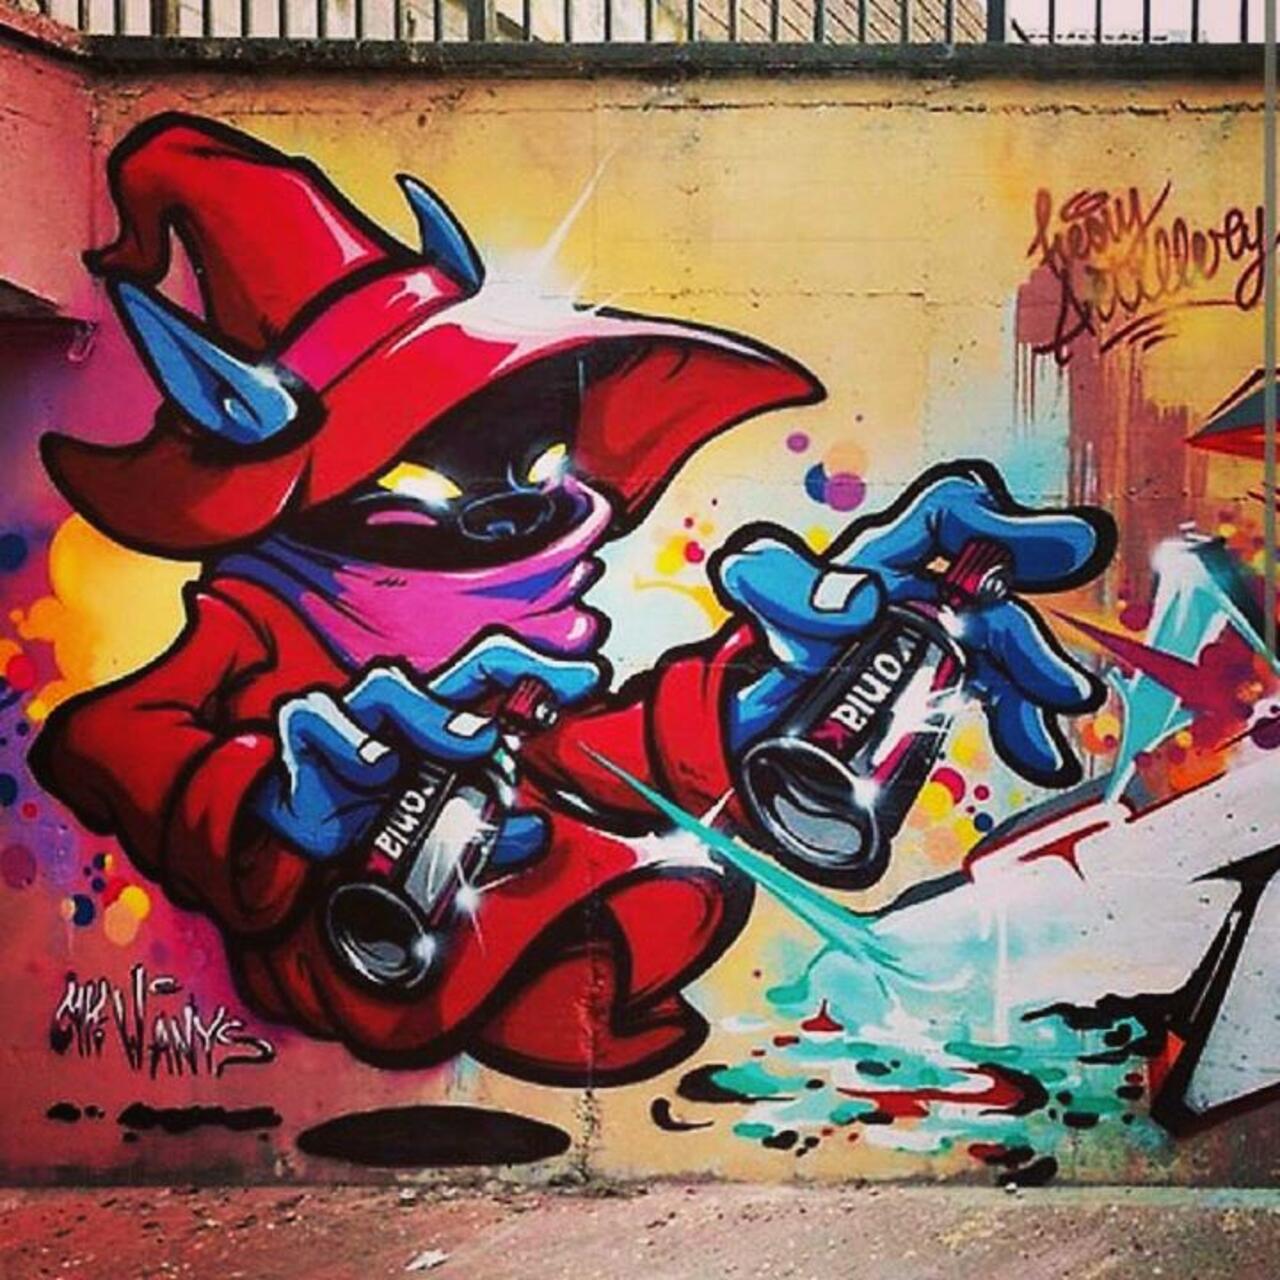 Some cool street art.

#Philly #graffiti #graff #streetart #art 215 http://t.co/Z6e02tObCQ